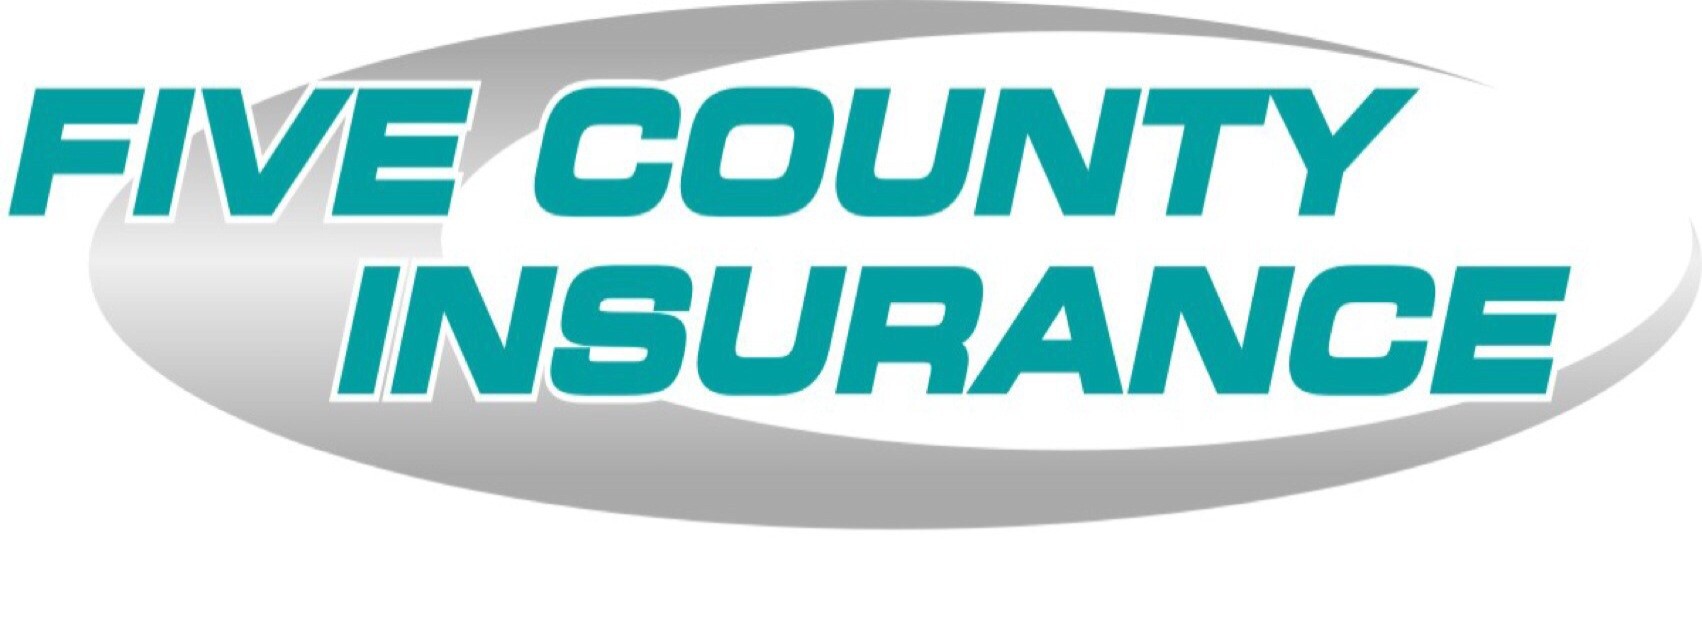 Five County Insurance Agency Linkedin